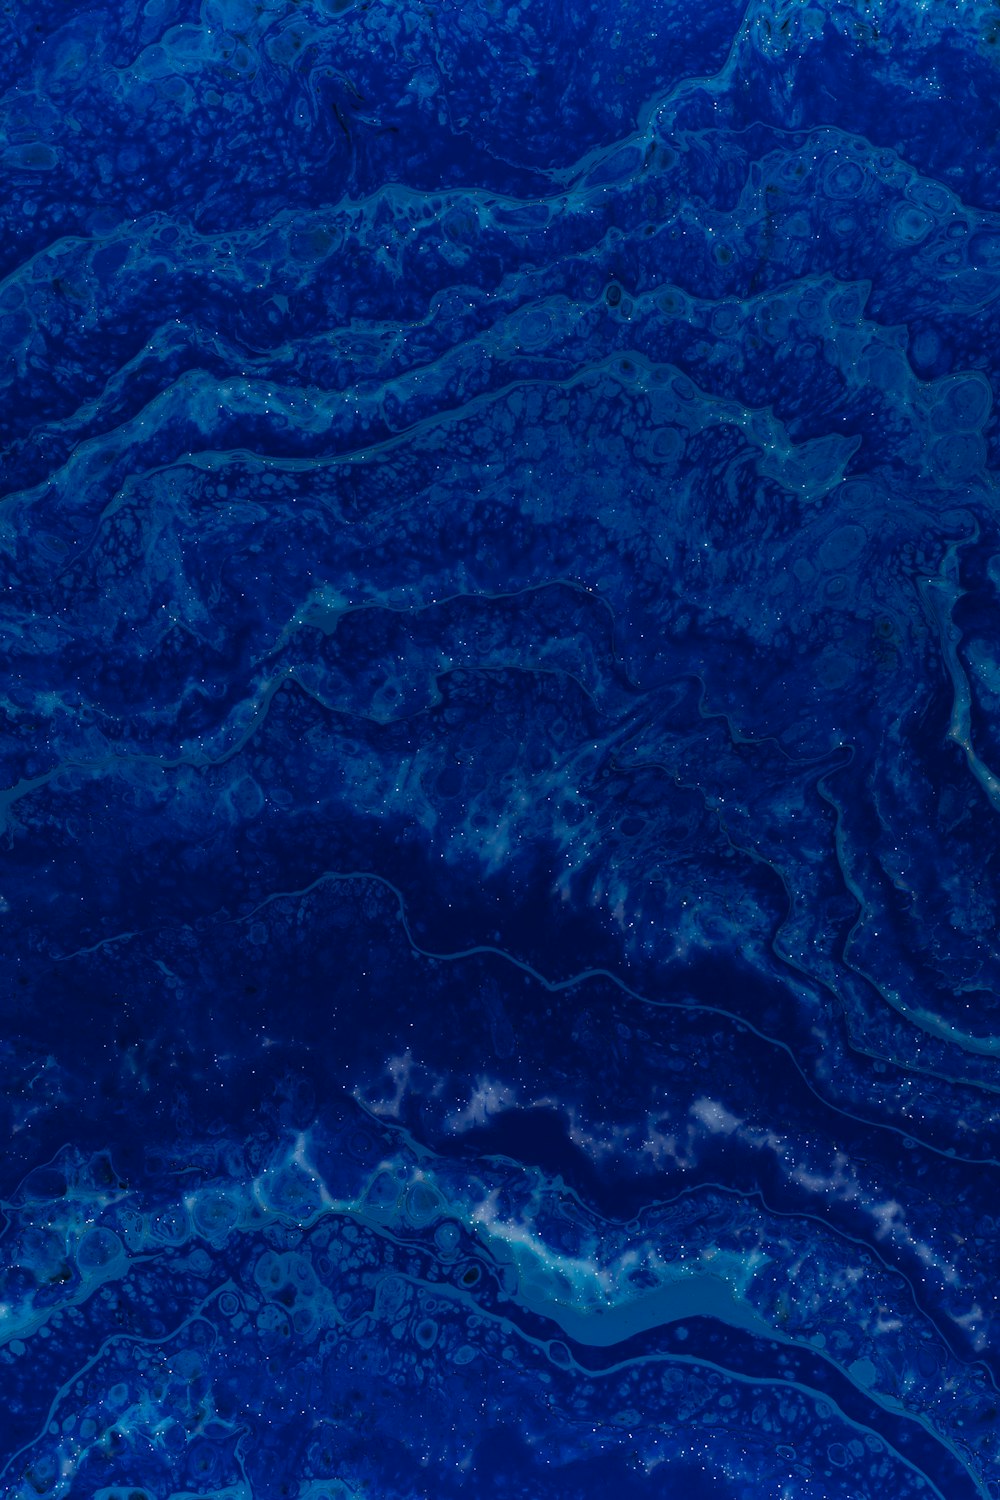 Dark Blue Texture Pictures Download Free Images On Unsplash